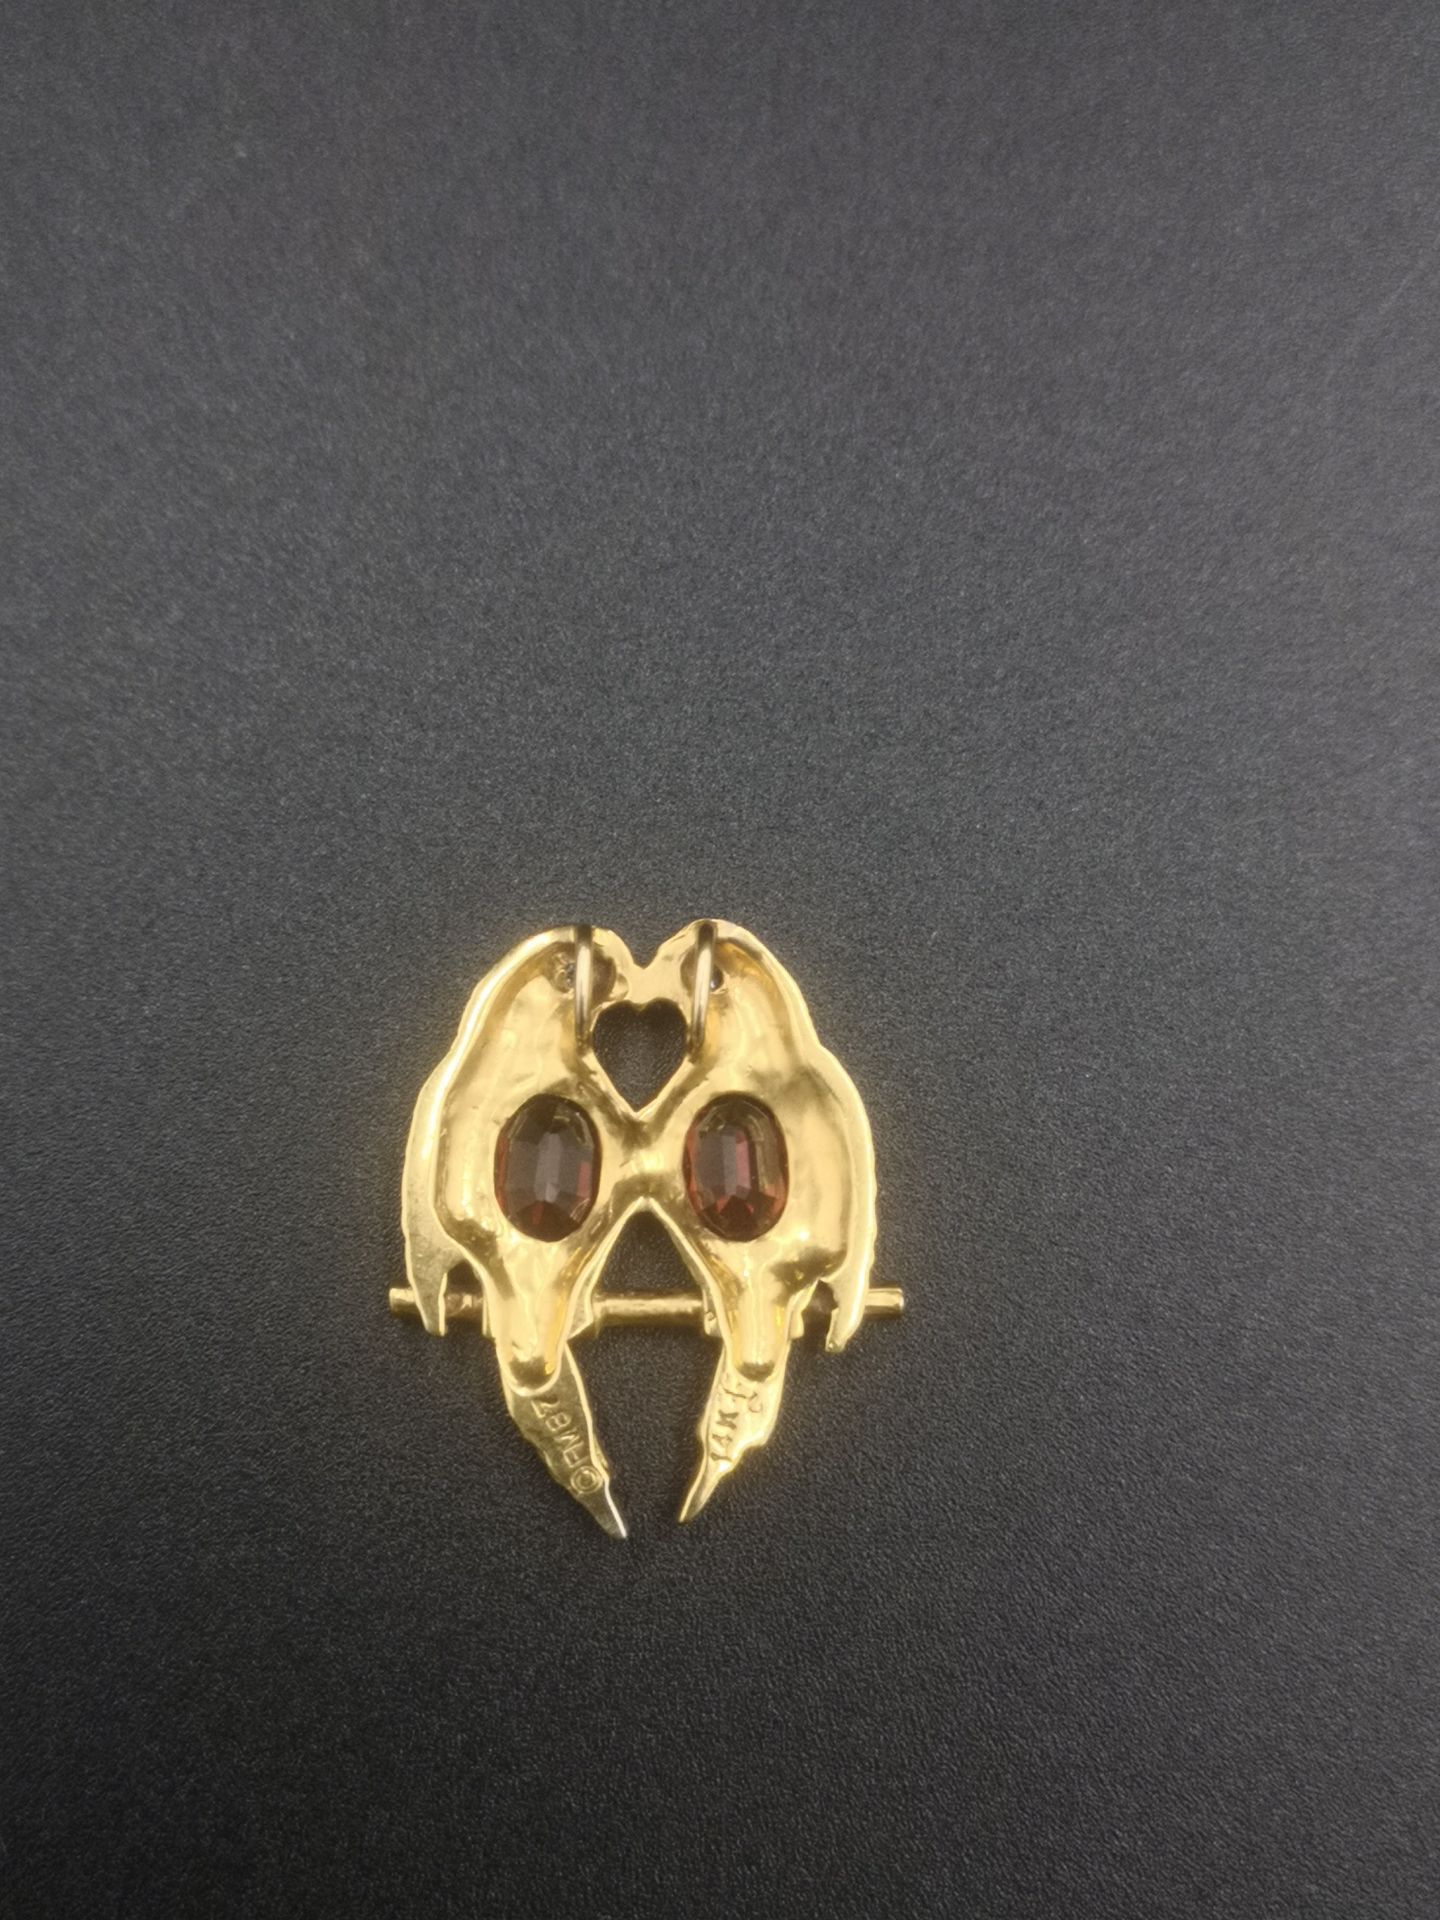 14ct gold, garnet and diamond brooch - Image 4 of 4